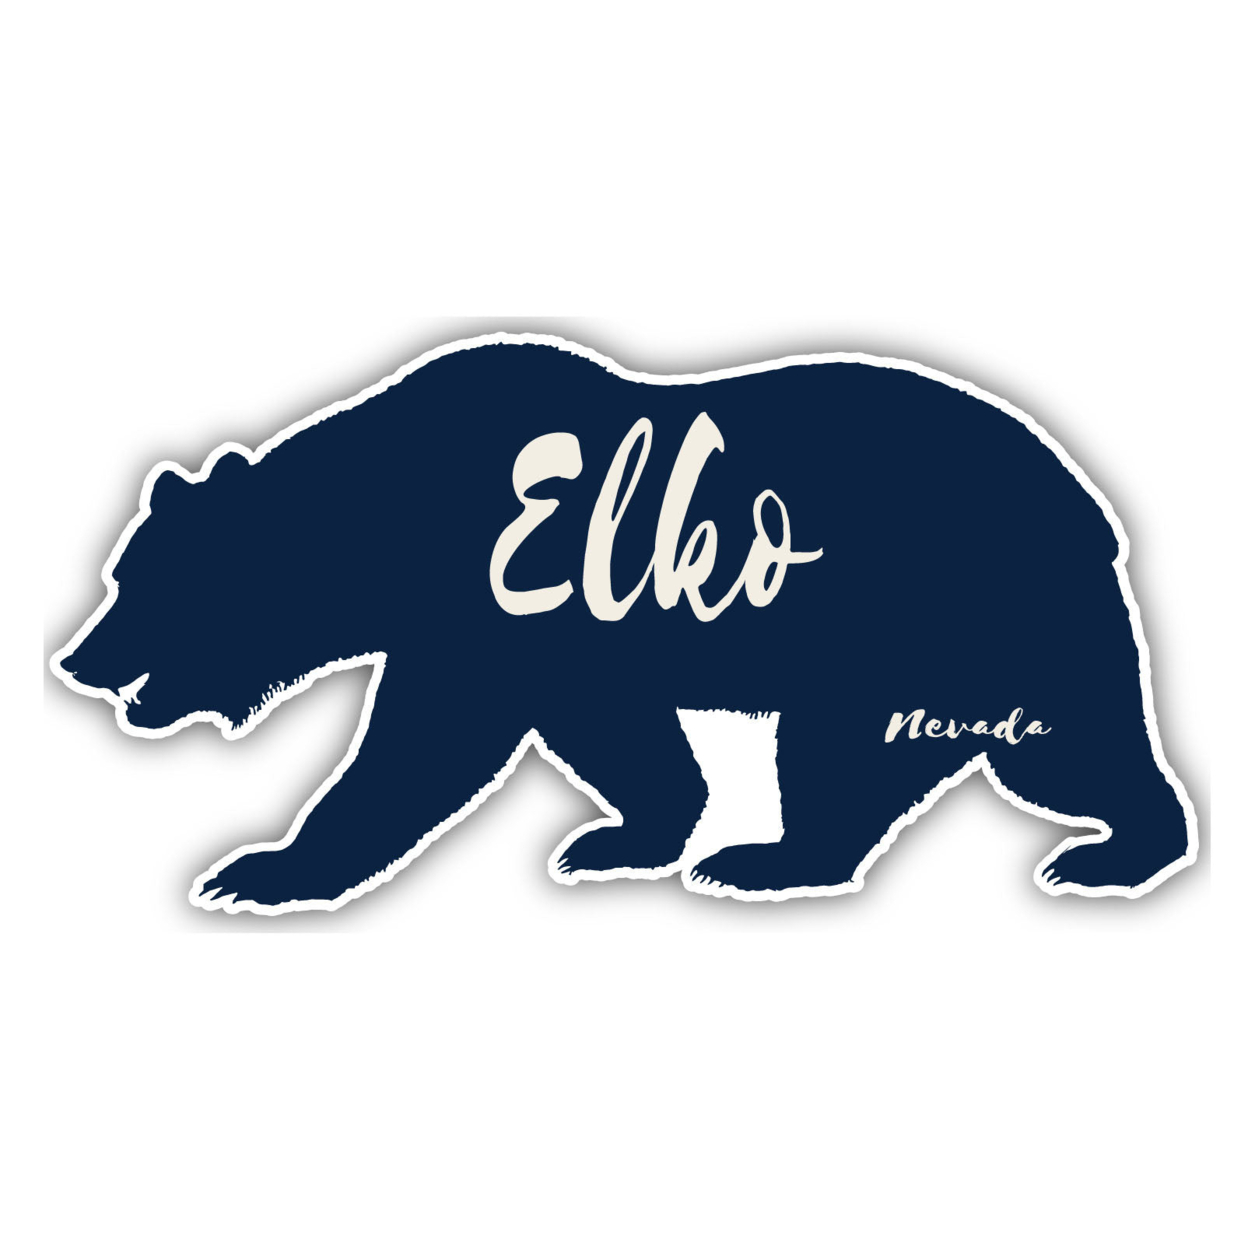 Elko Nevada Souvenir Decorative Stickers (Choose Theme And Size) - Single Unit, 6-Inch, Camp Life